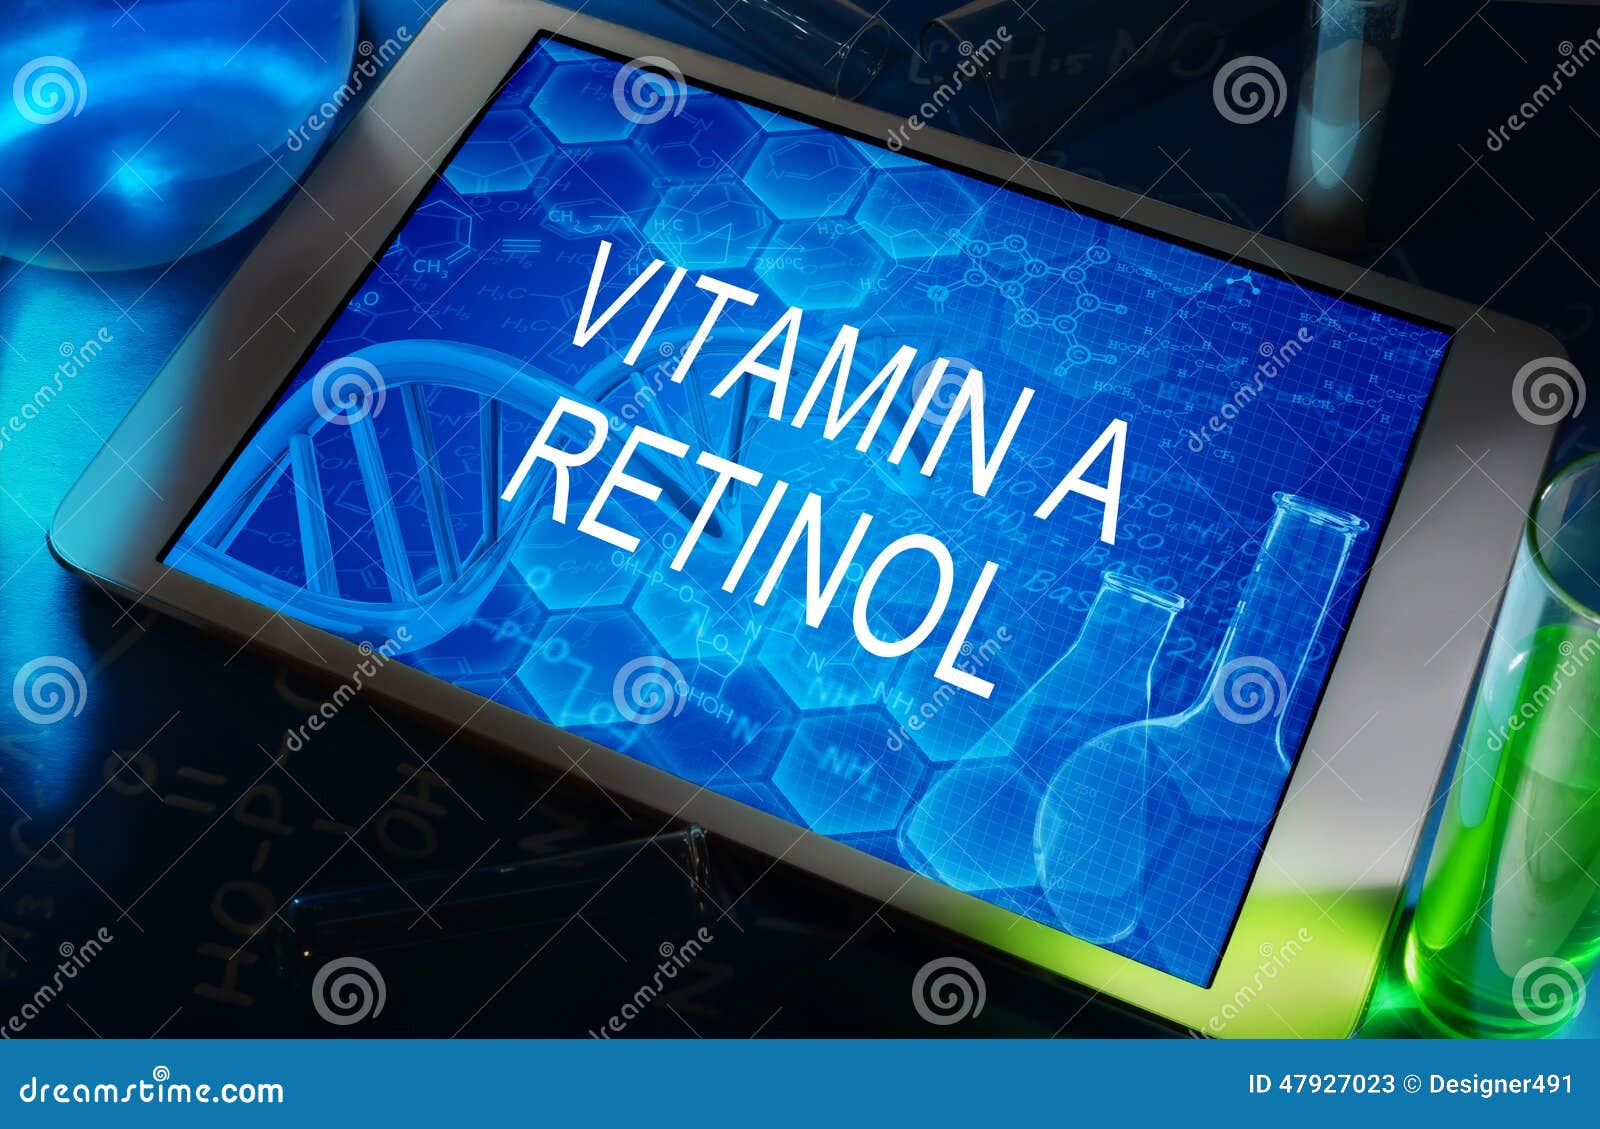 the chemical formula of vitamin a (retinol)